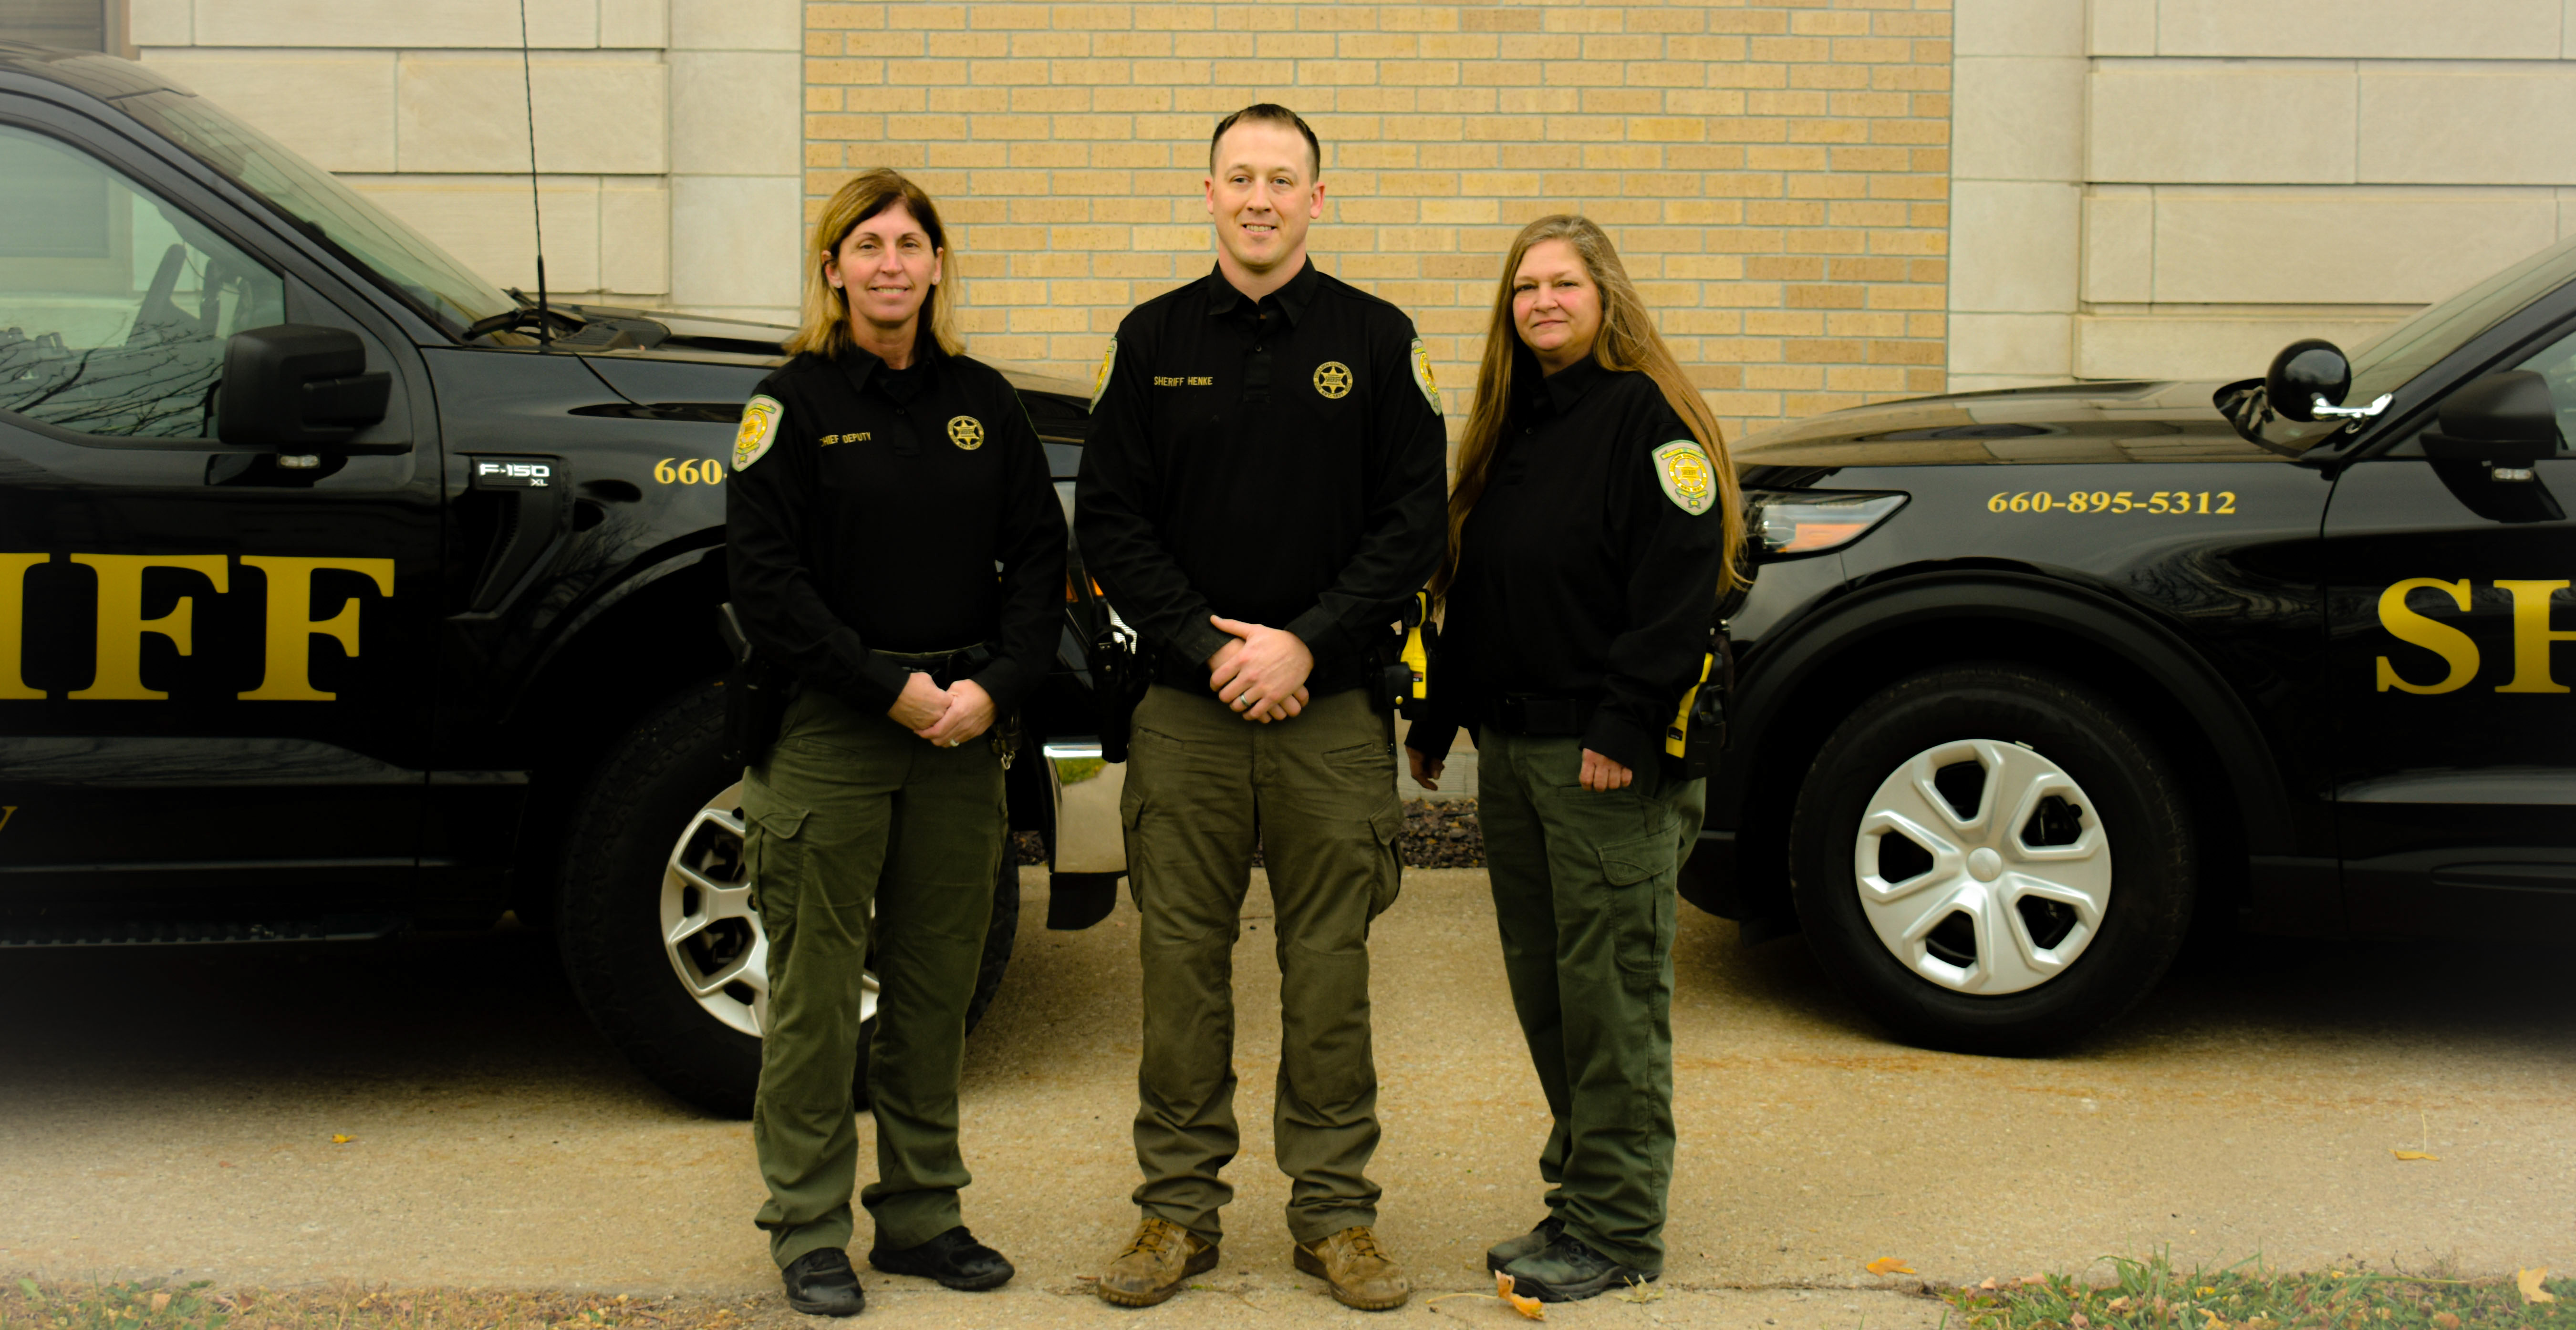 Chief Deputy Melte, Sheriff Henke, Sgt. Walton standing in front of patrol vehicles.